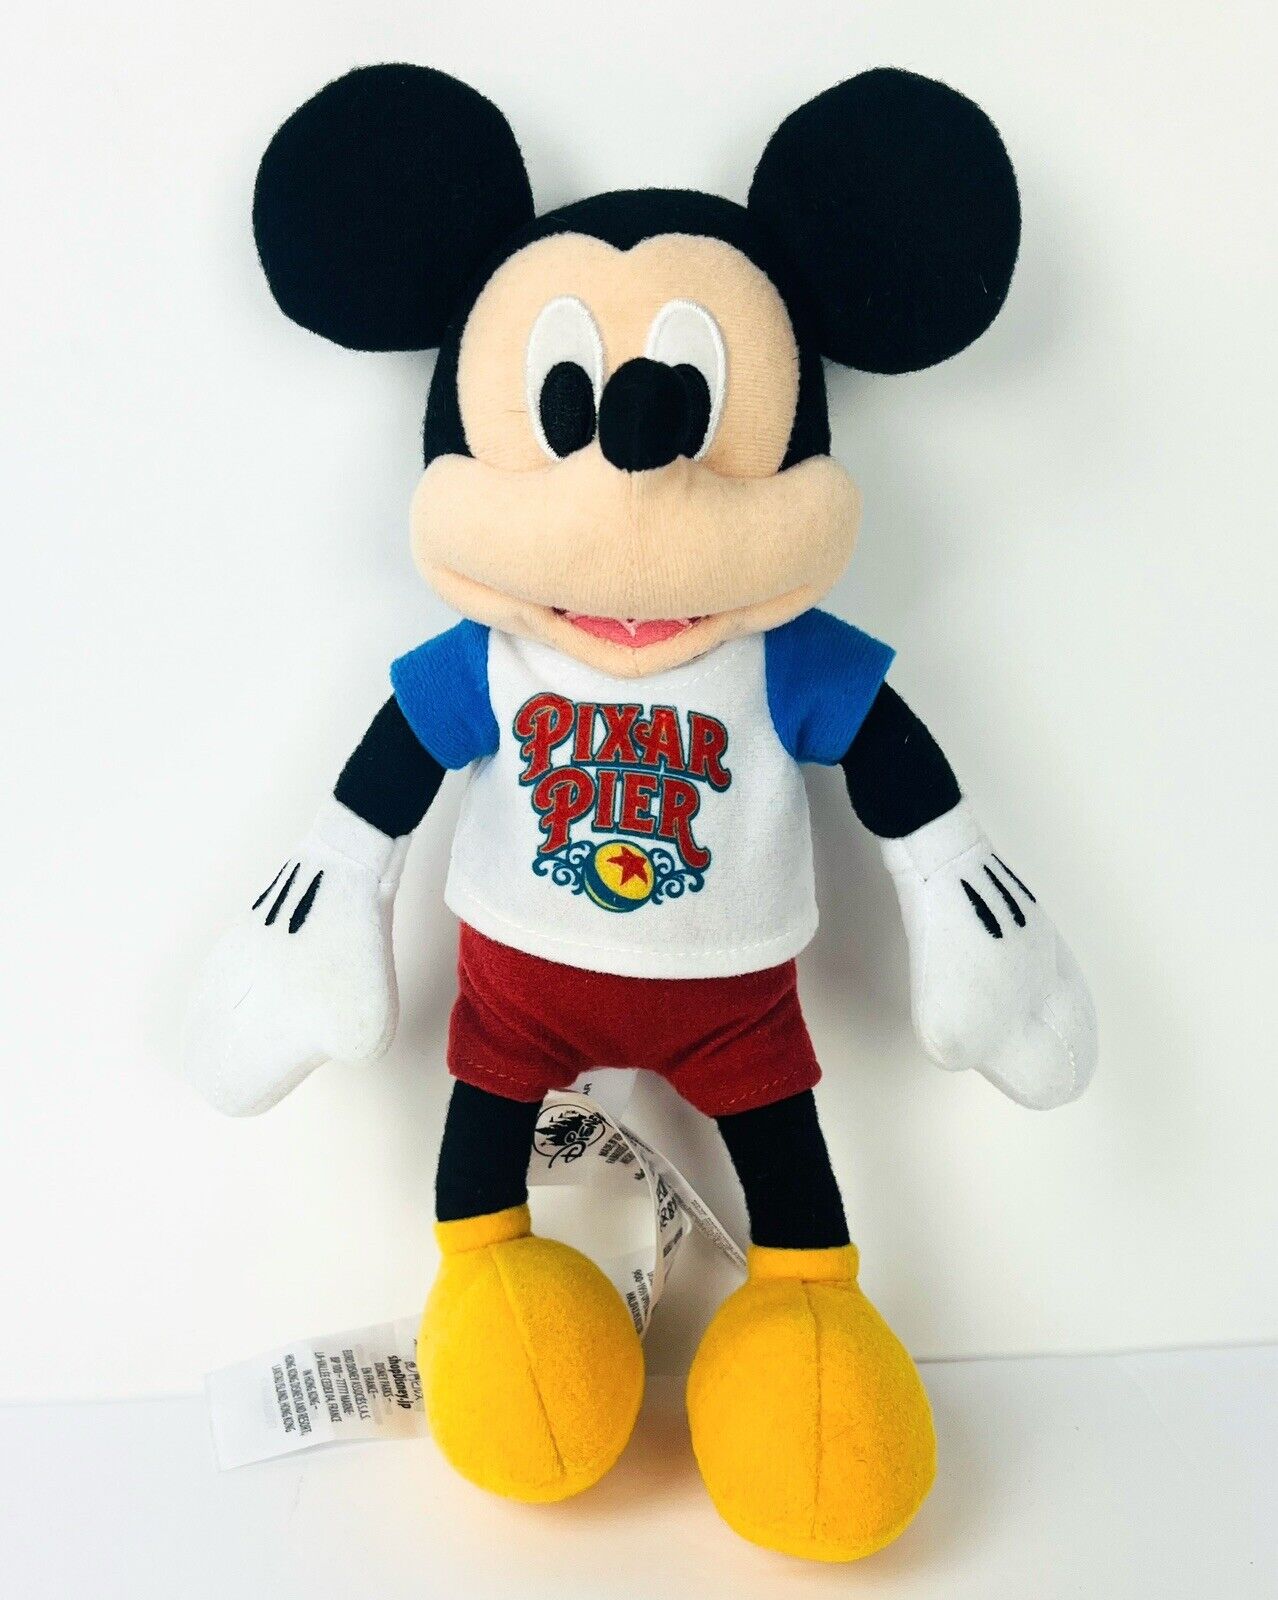 Disney Parks Pixar Pier Mickey Mouse Stuffed Plush - 10” toy